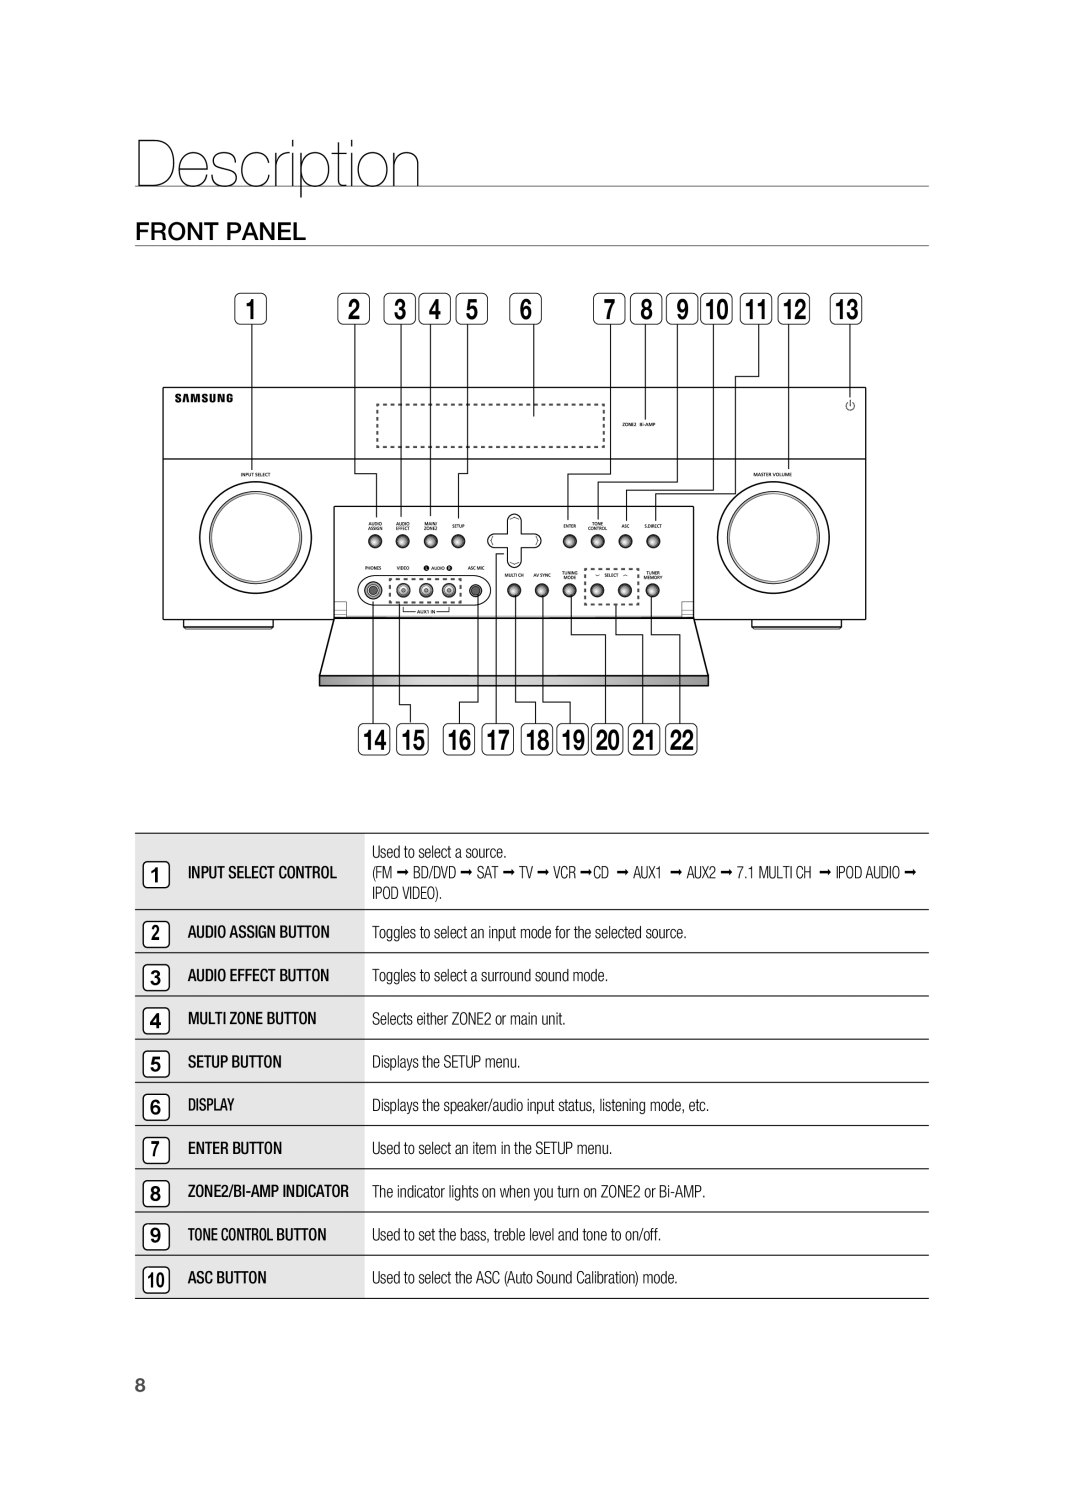 Samsung HW-C900-XAA user manual Description, Front Panel 